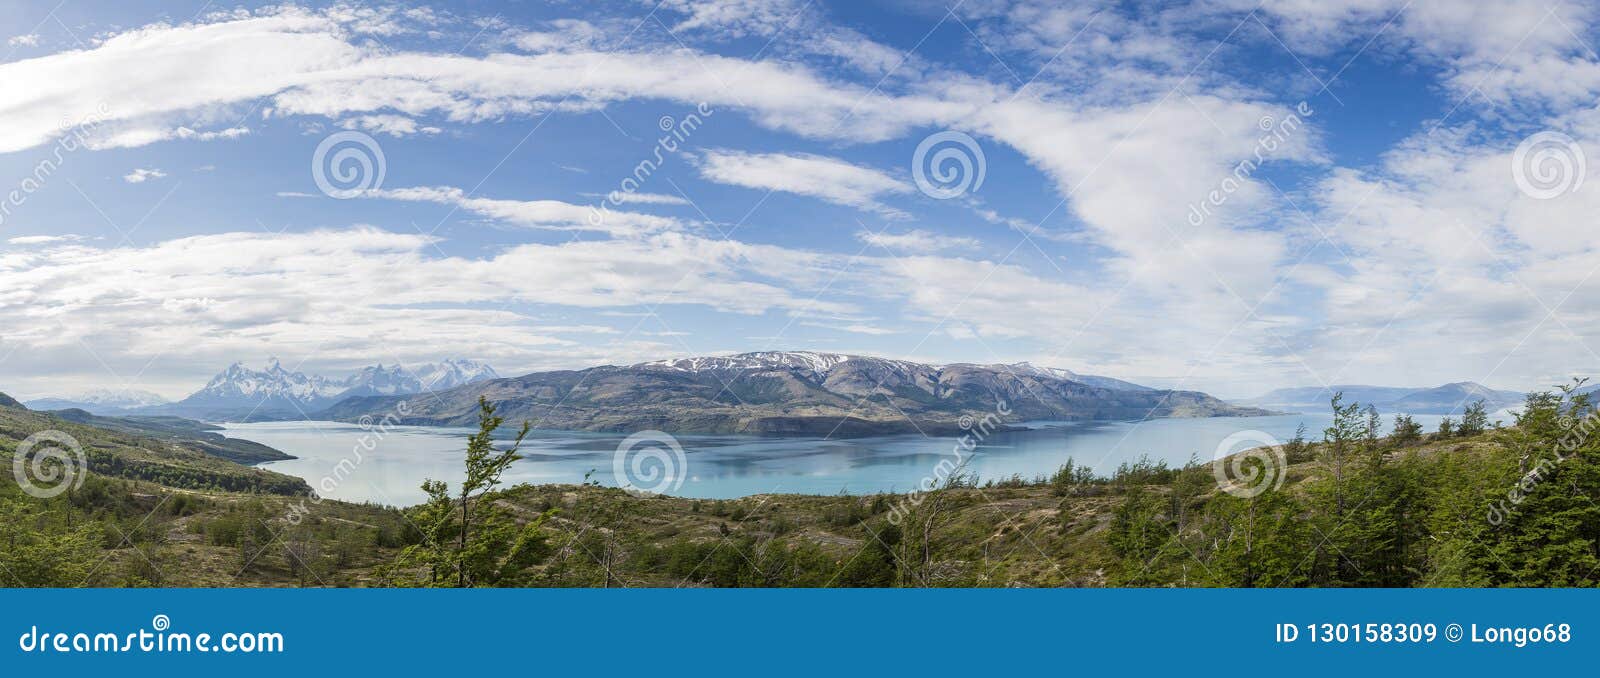 panorama picture of lago el toro at the torres del paine national park